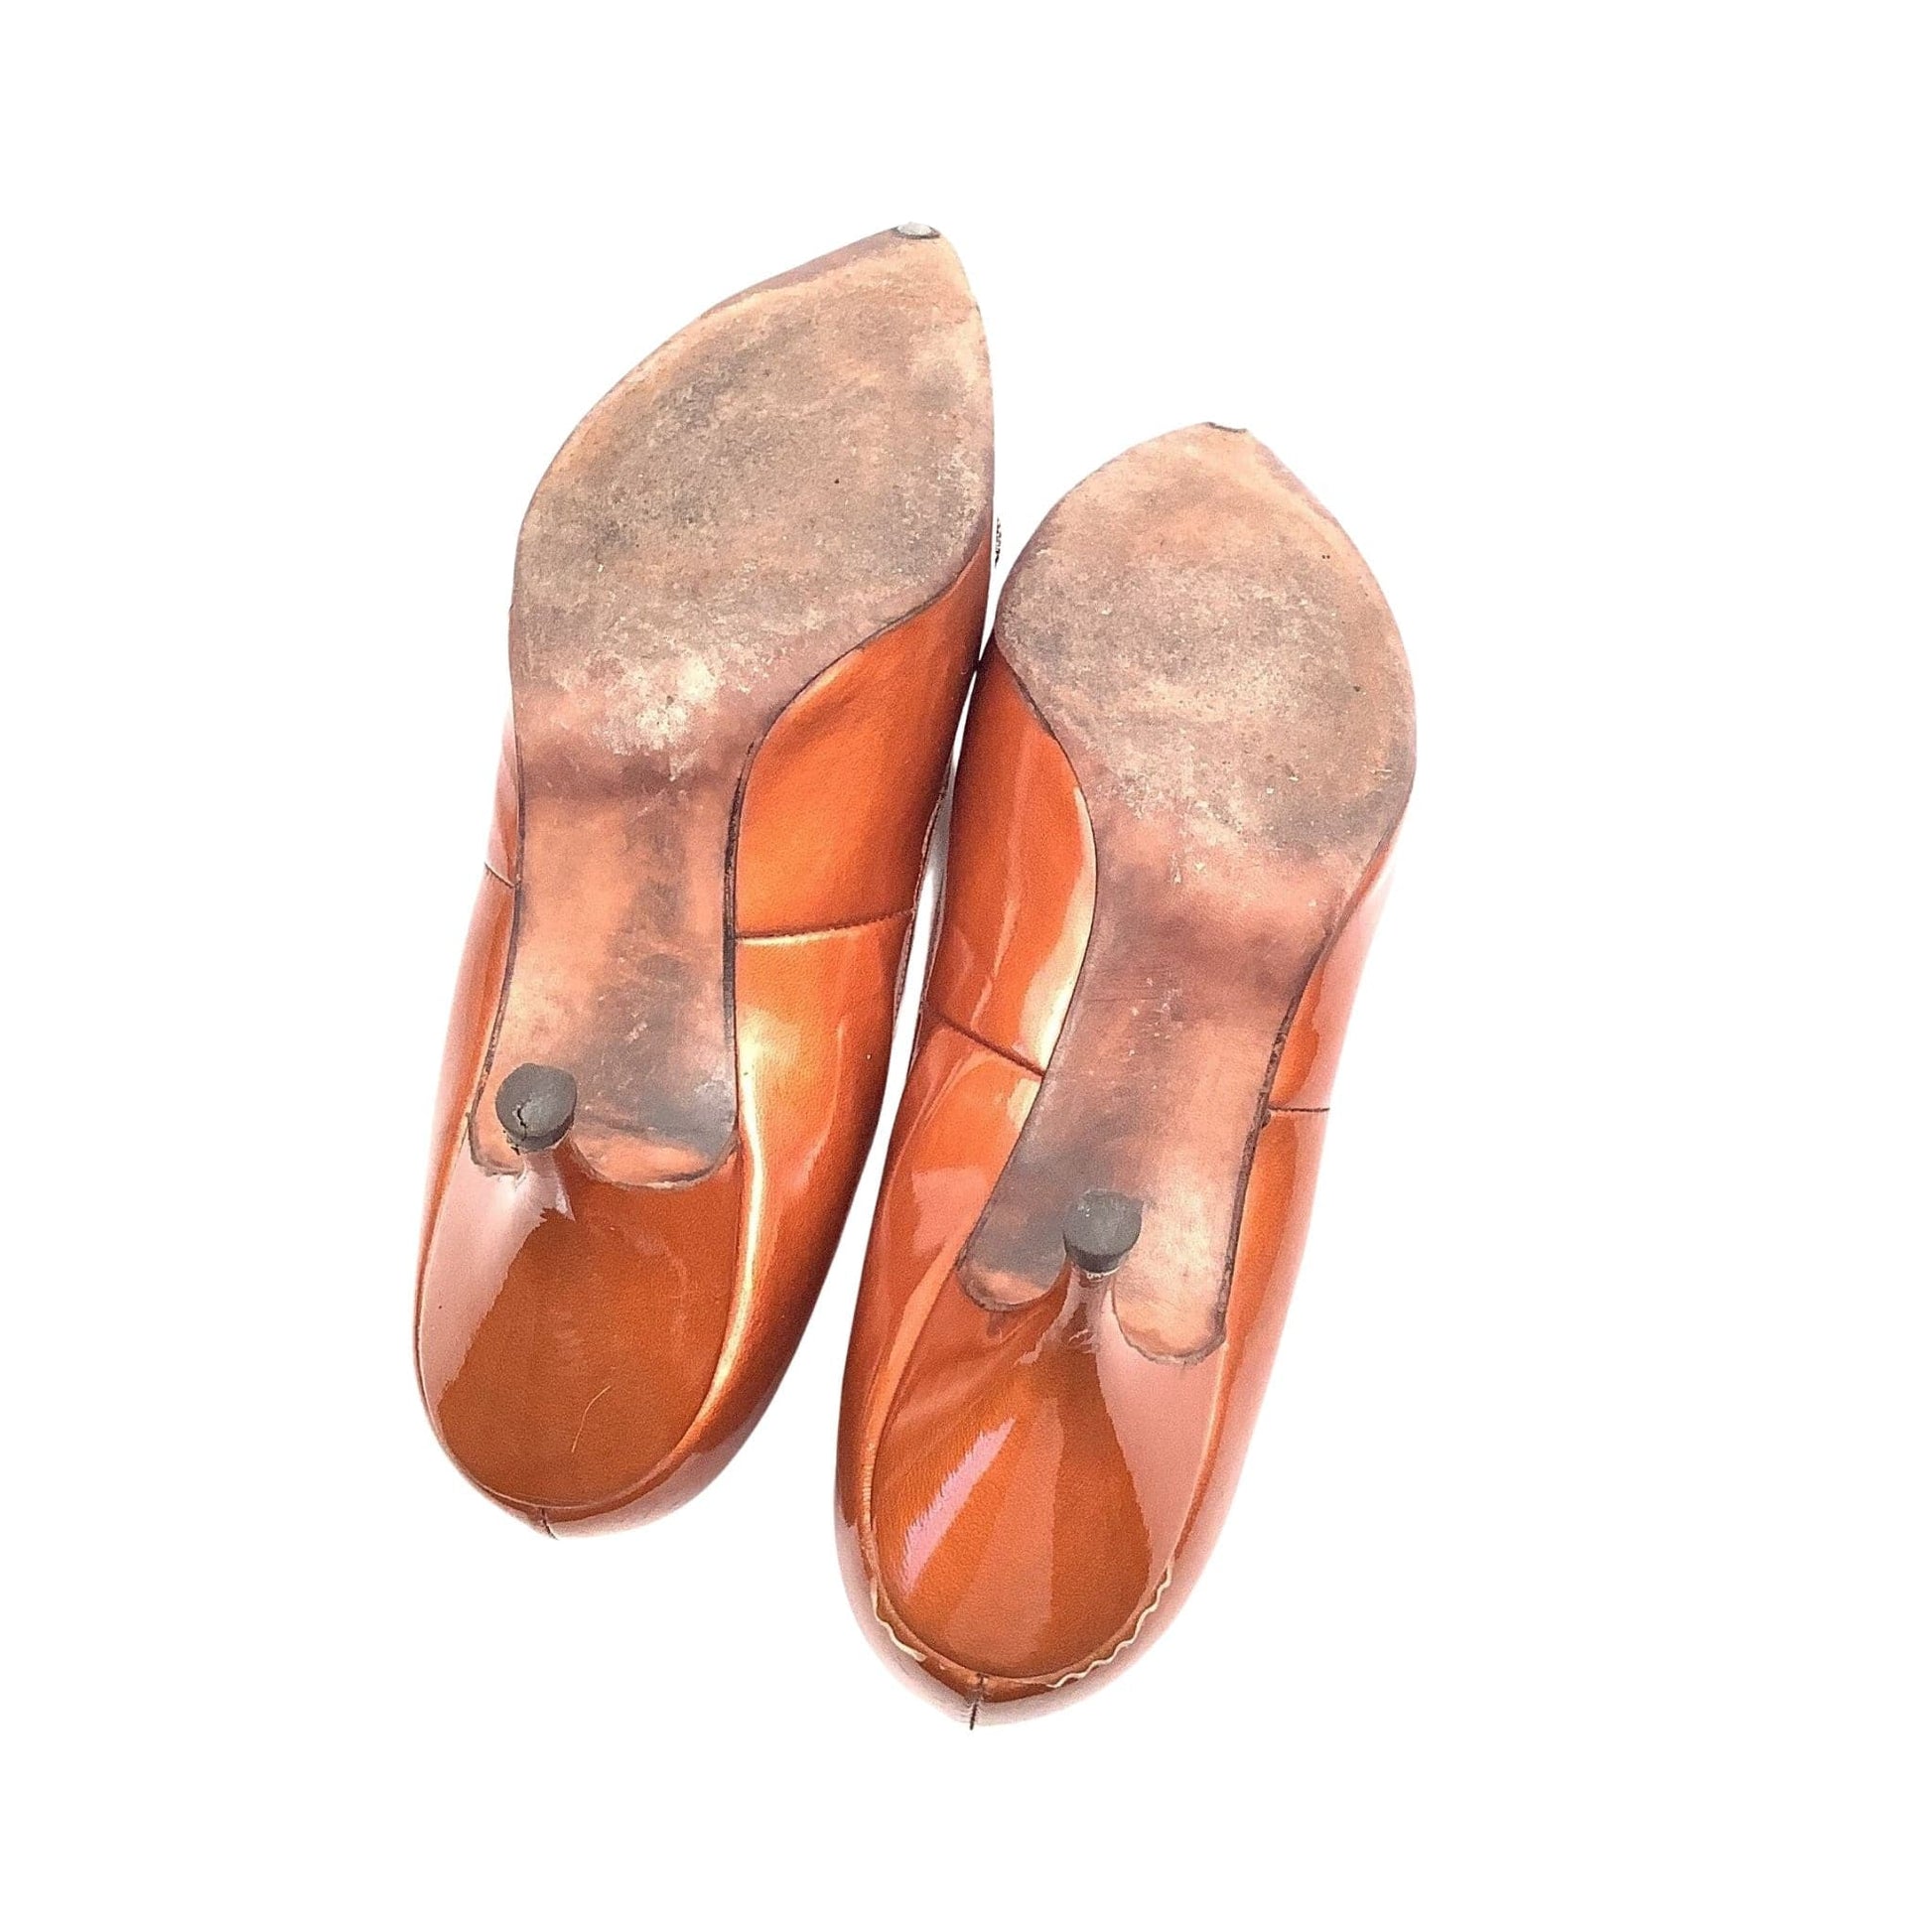 Orange Pin-up Heels 7 / Orange / Vintage 1950s